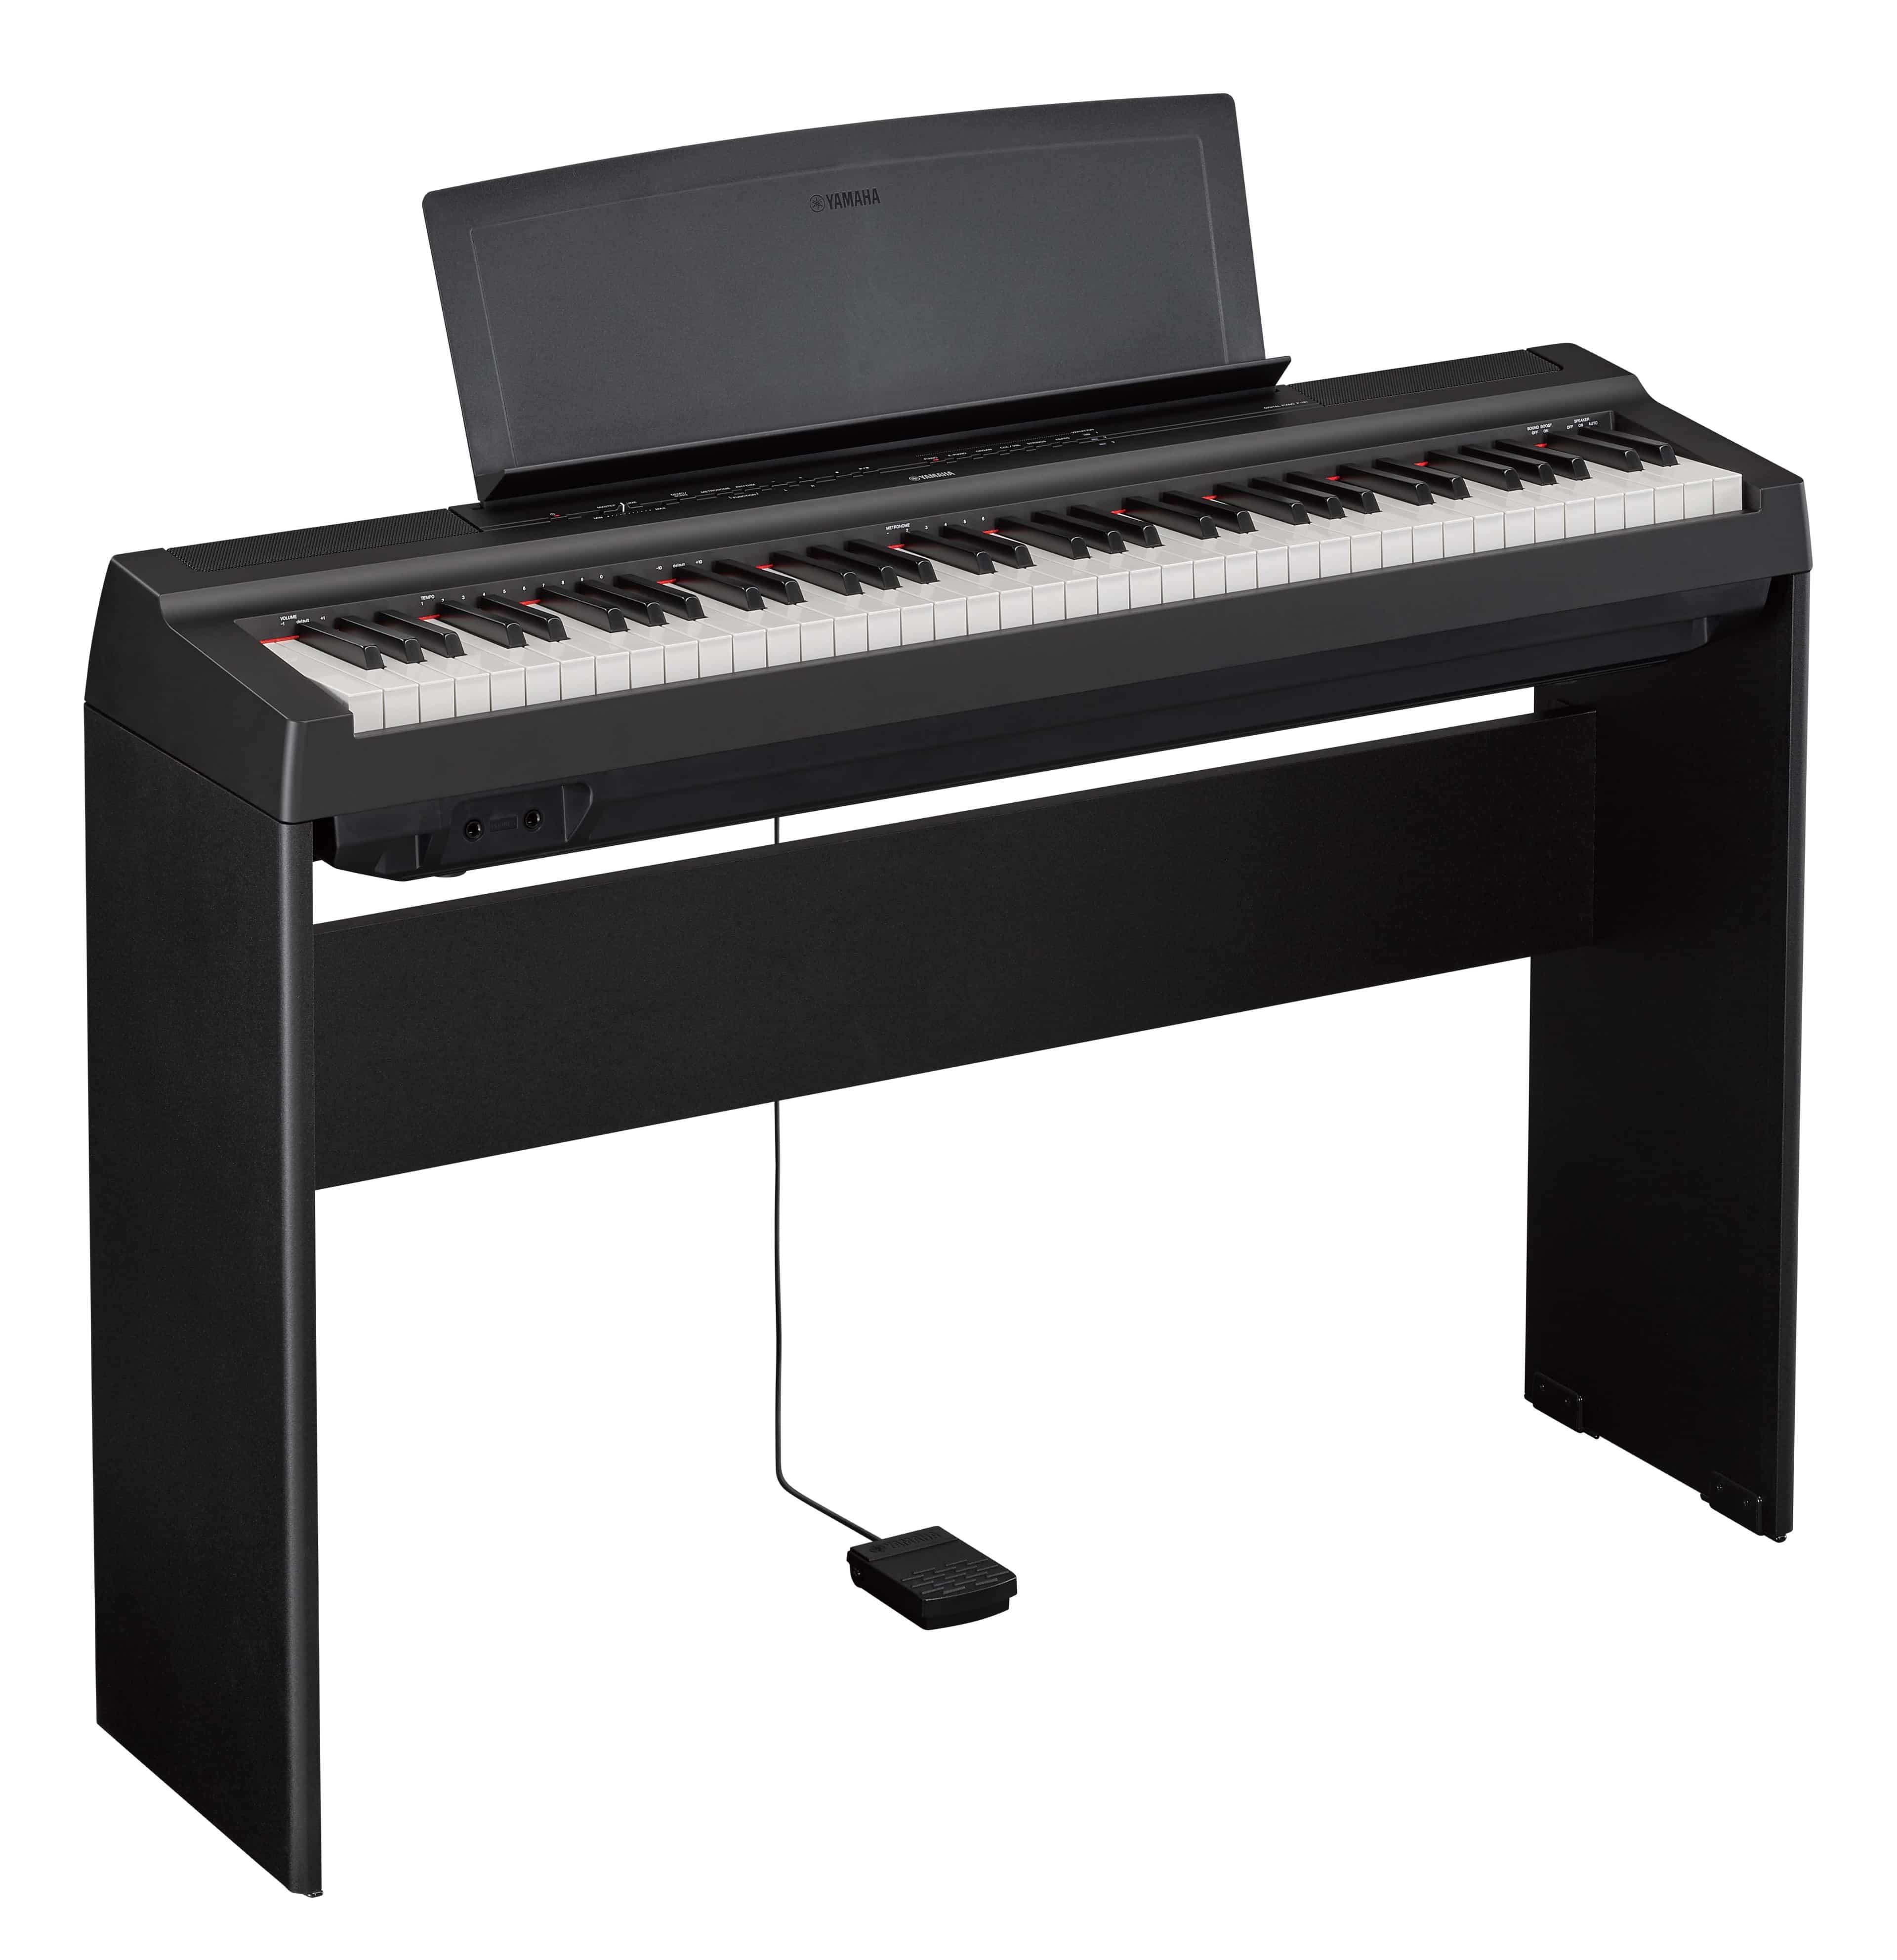 Equipment Review: Yamaha P-121B Digital Piano